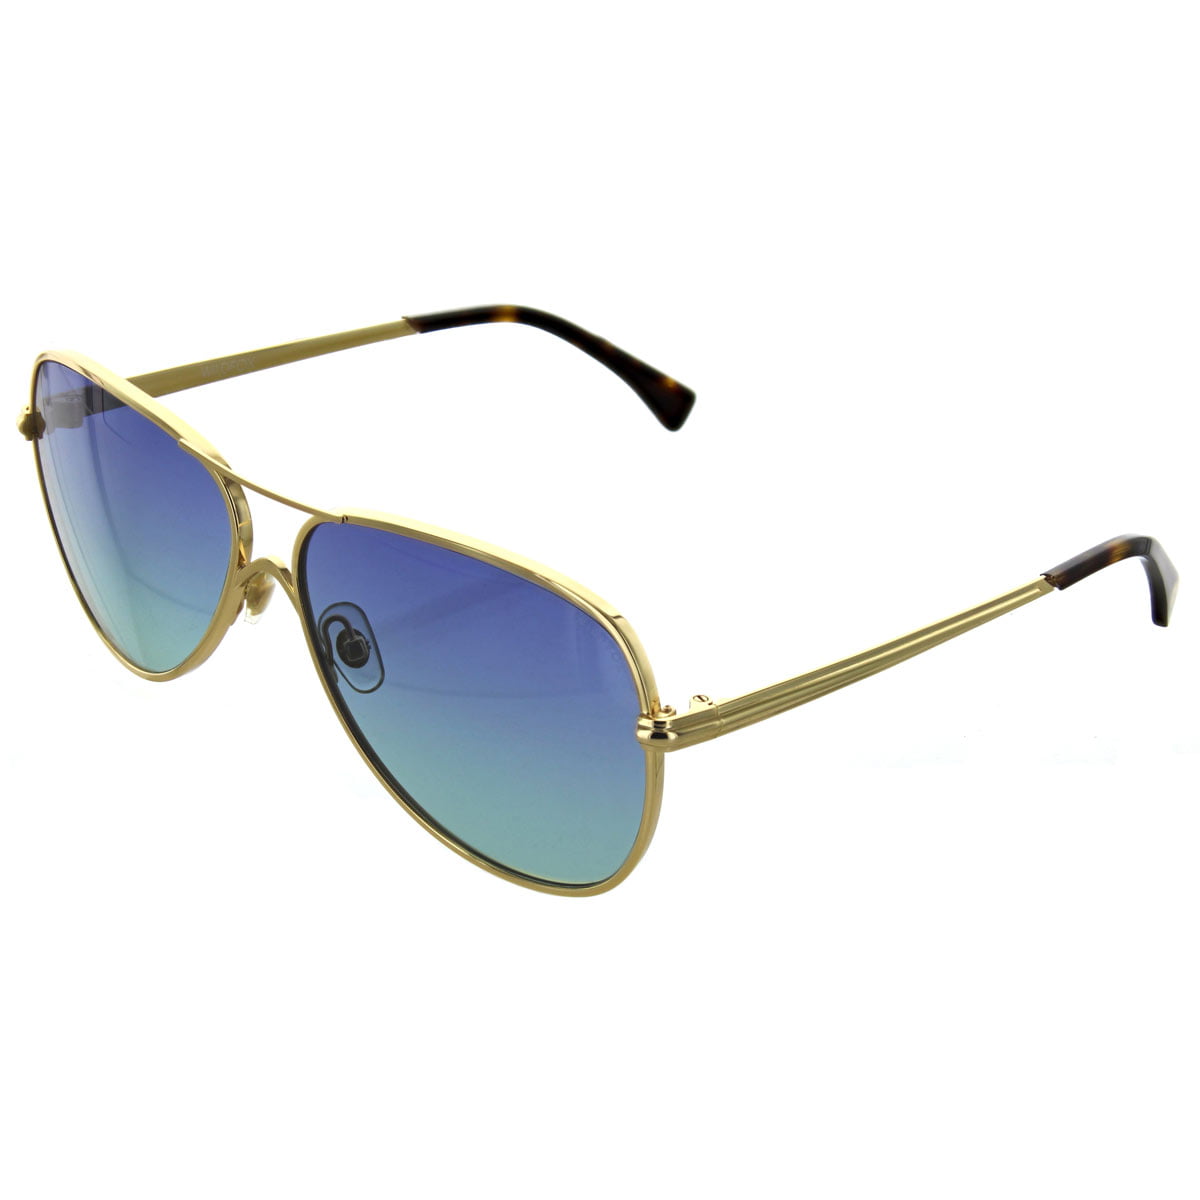 Wildfox AIRFOX-GMLT Women's Airfox Gold Frame Sunglasses - Walmart.com